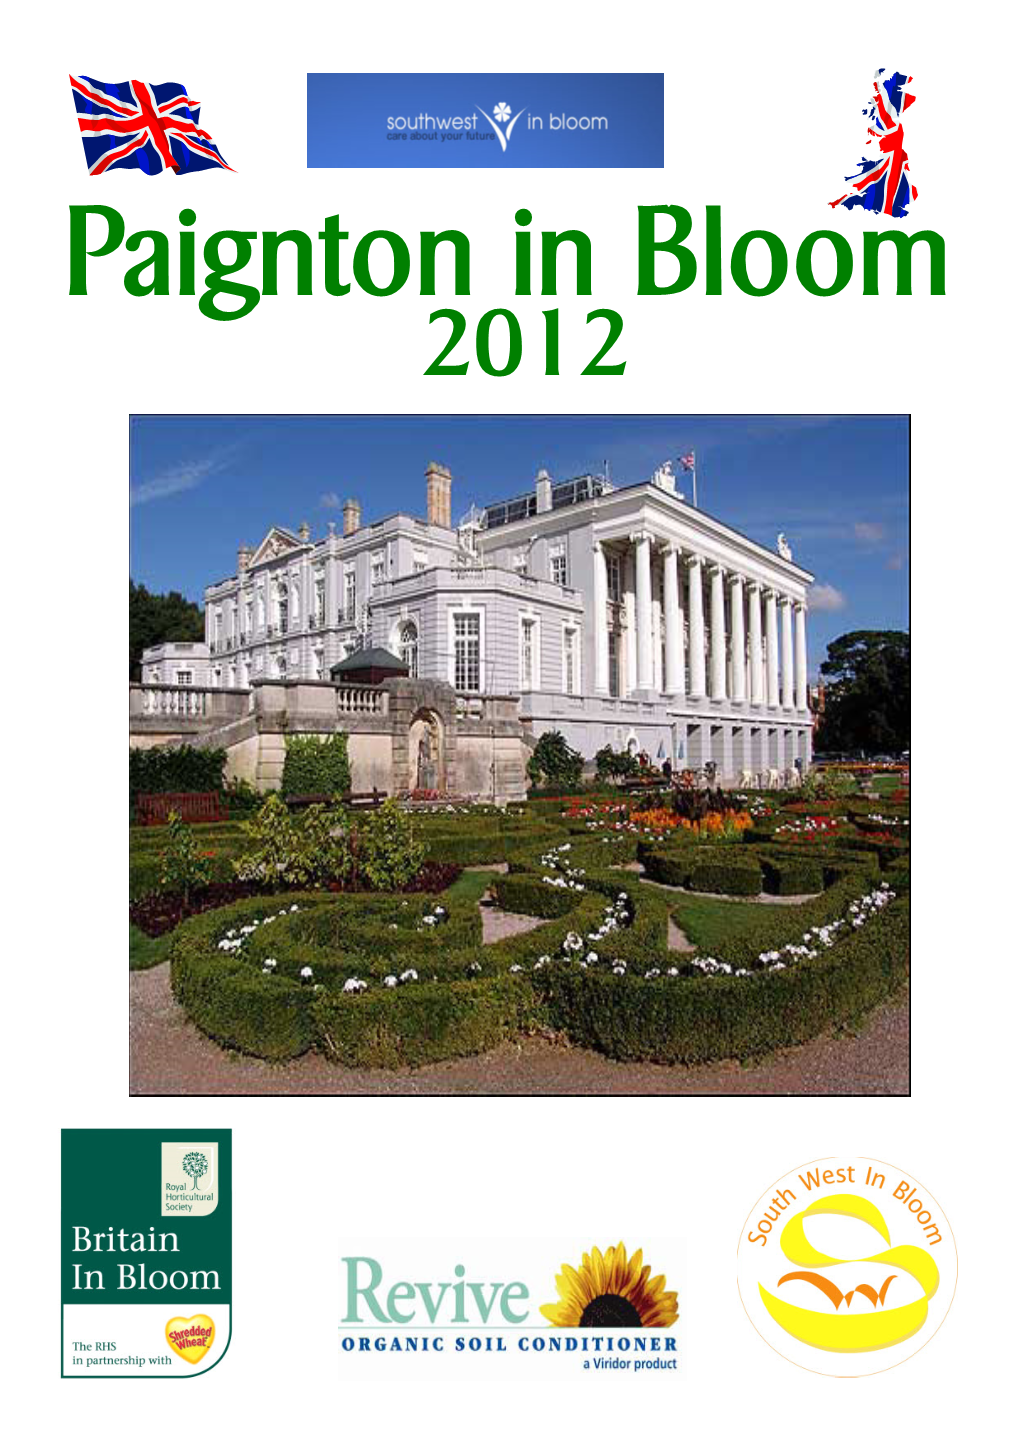 In Bloom Paignton 2012